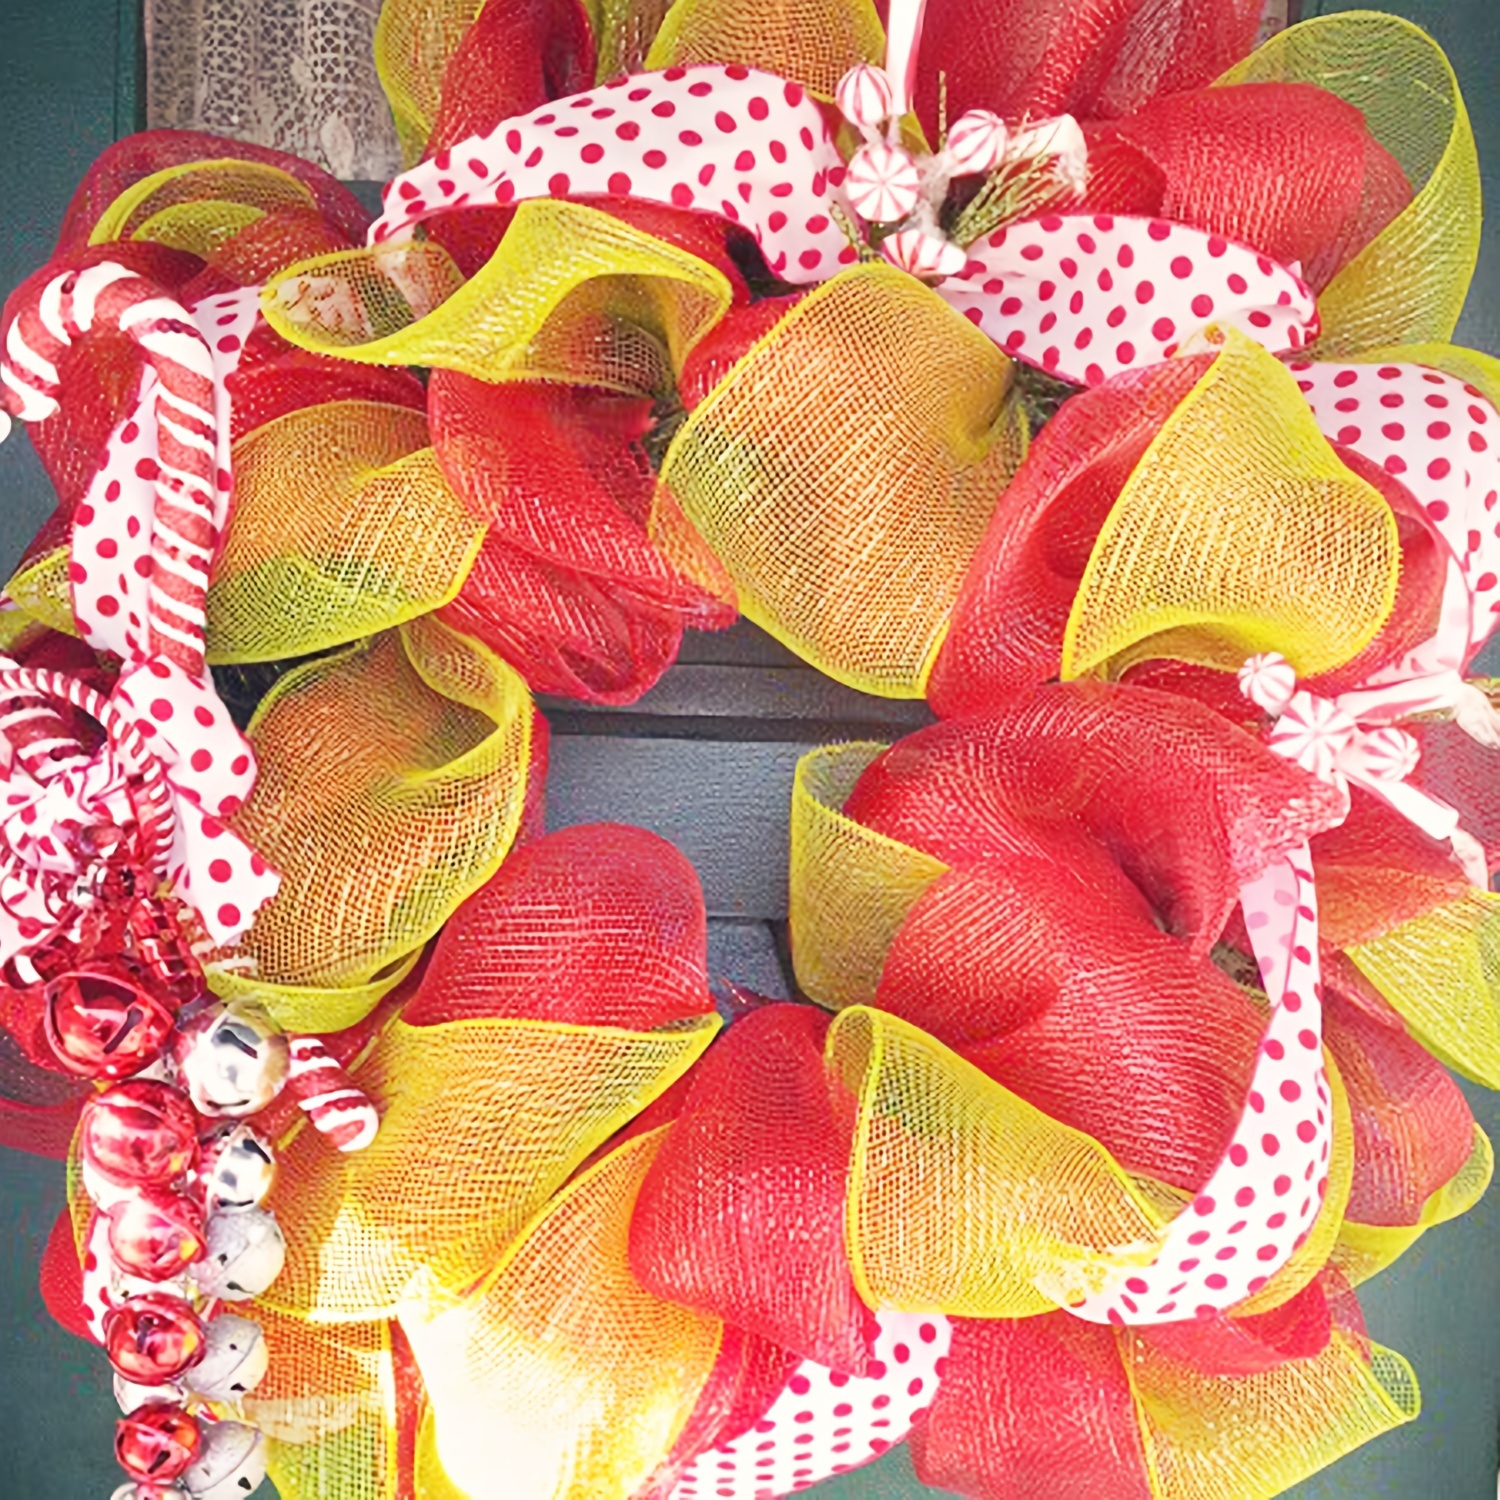 Deco Poly Mesh Ribbon - 10 inch x 30 feet Each Roll - for Wreaths